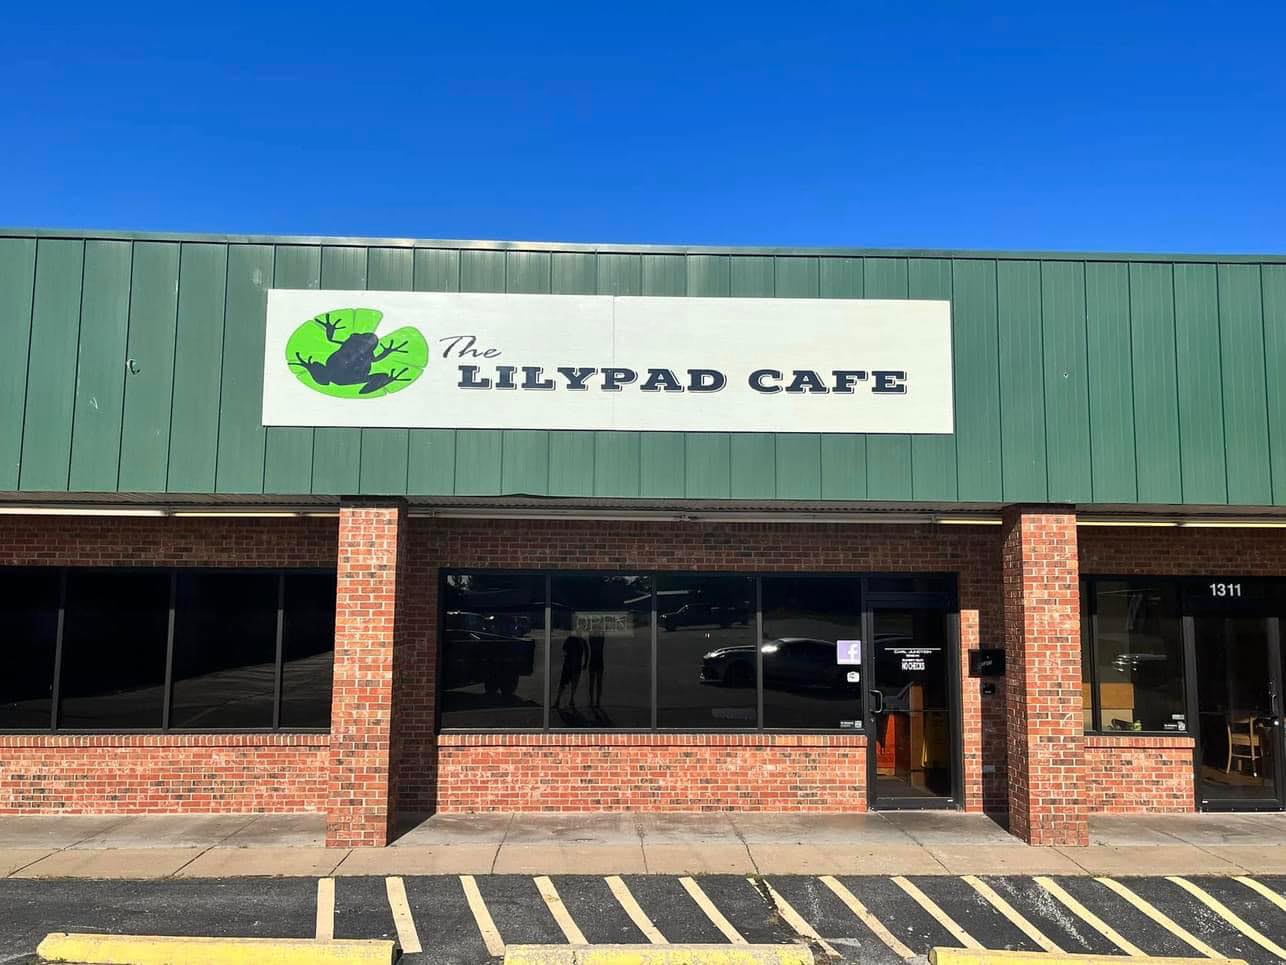 The Lilypad Cafe